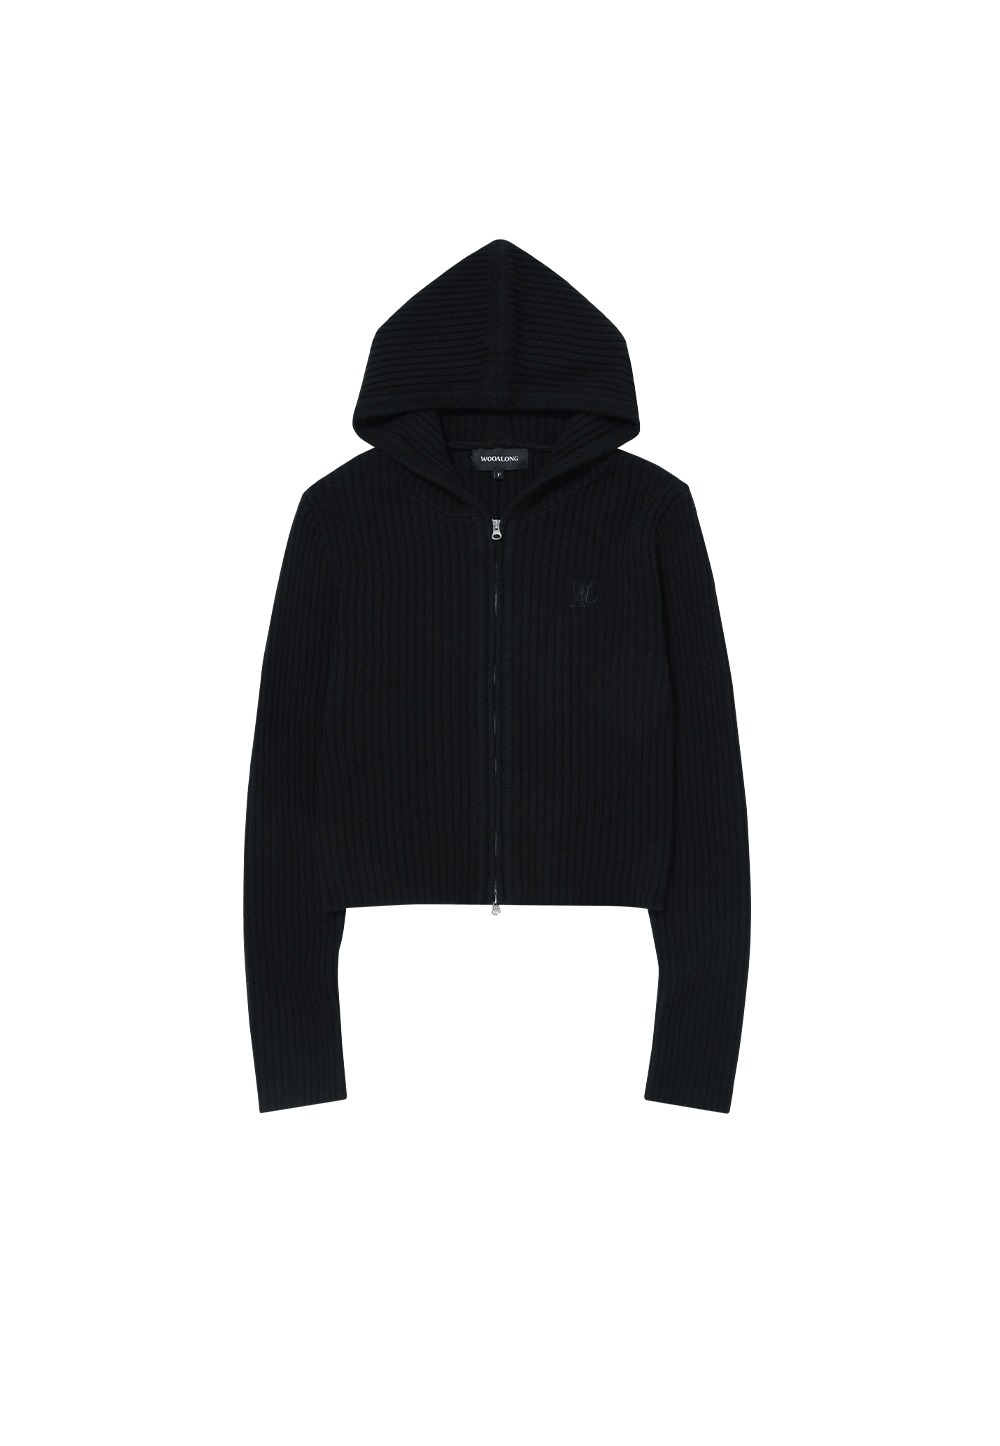 Signature slim hood knit zip-up - BLACK